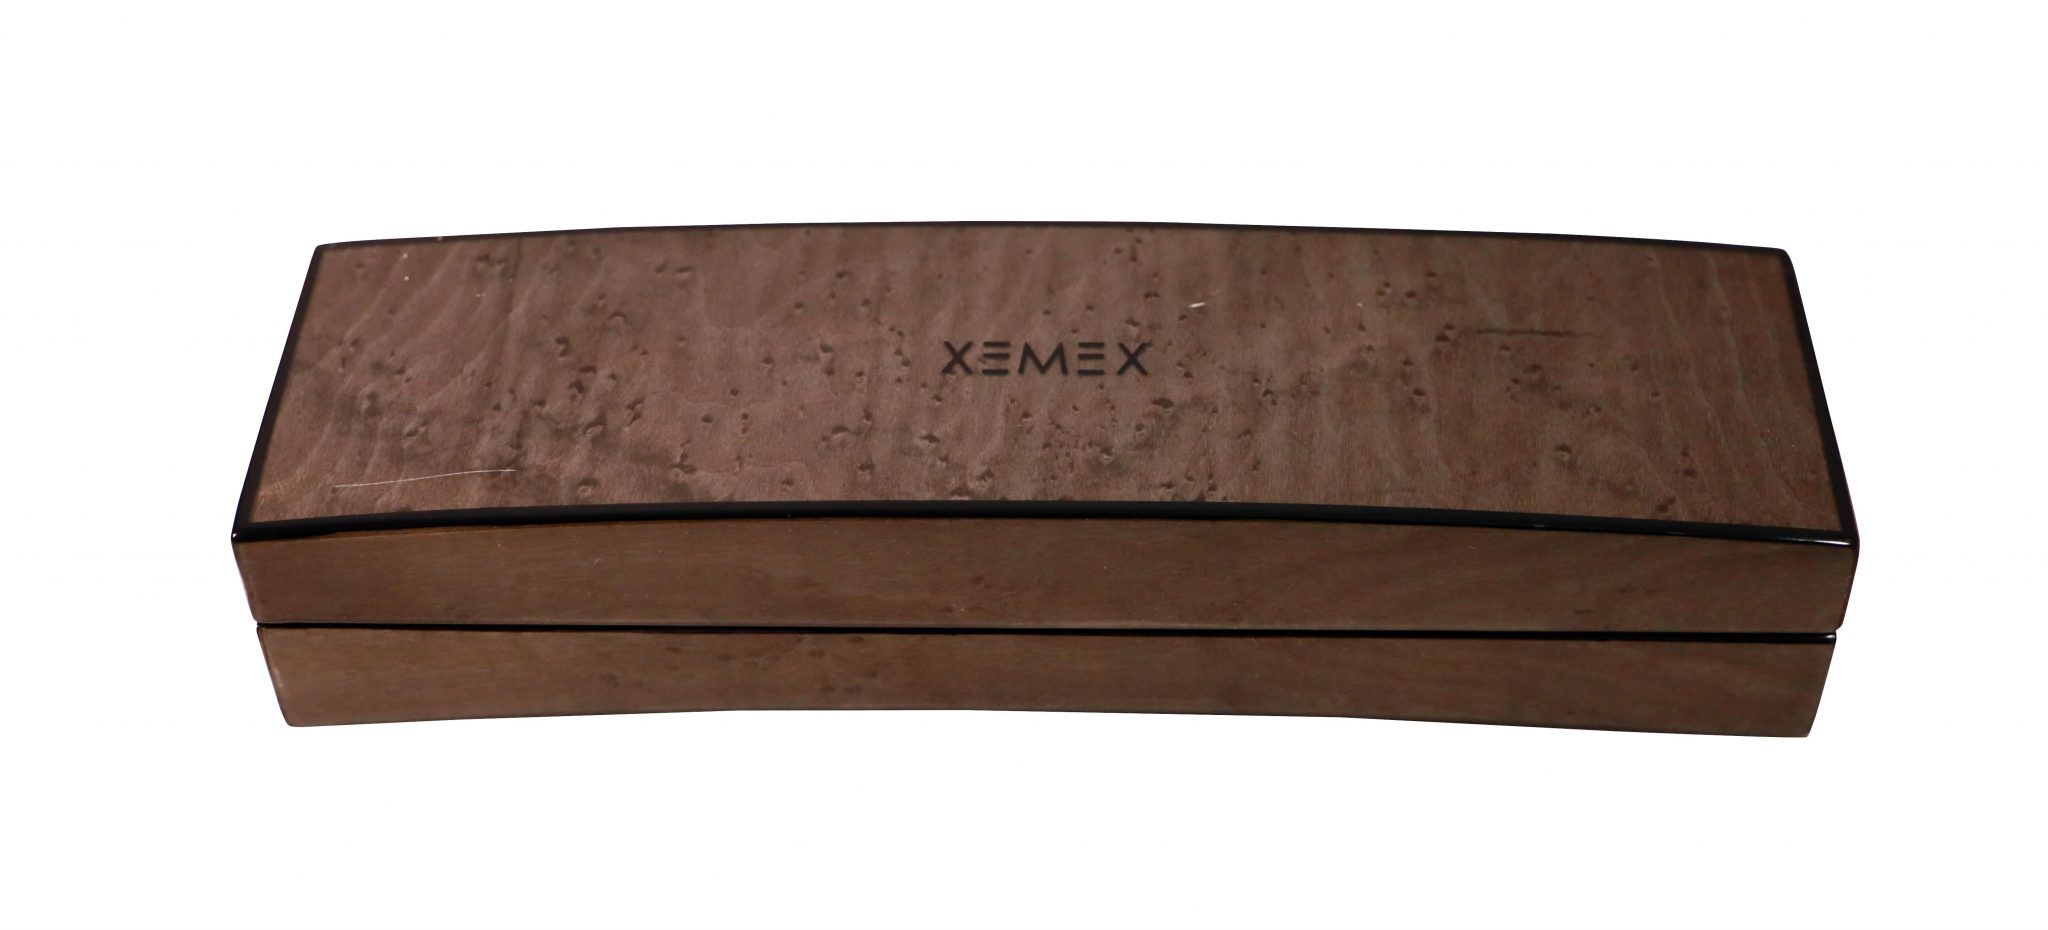 Xemex Watch Box - Rare Watch Parts